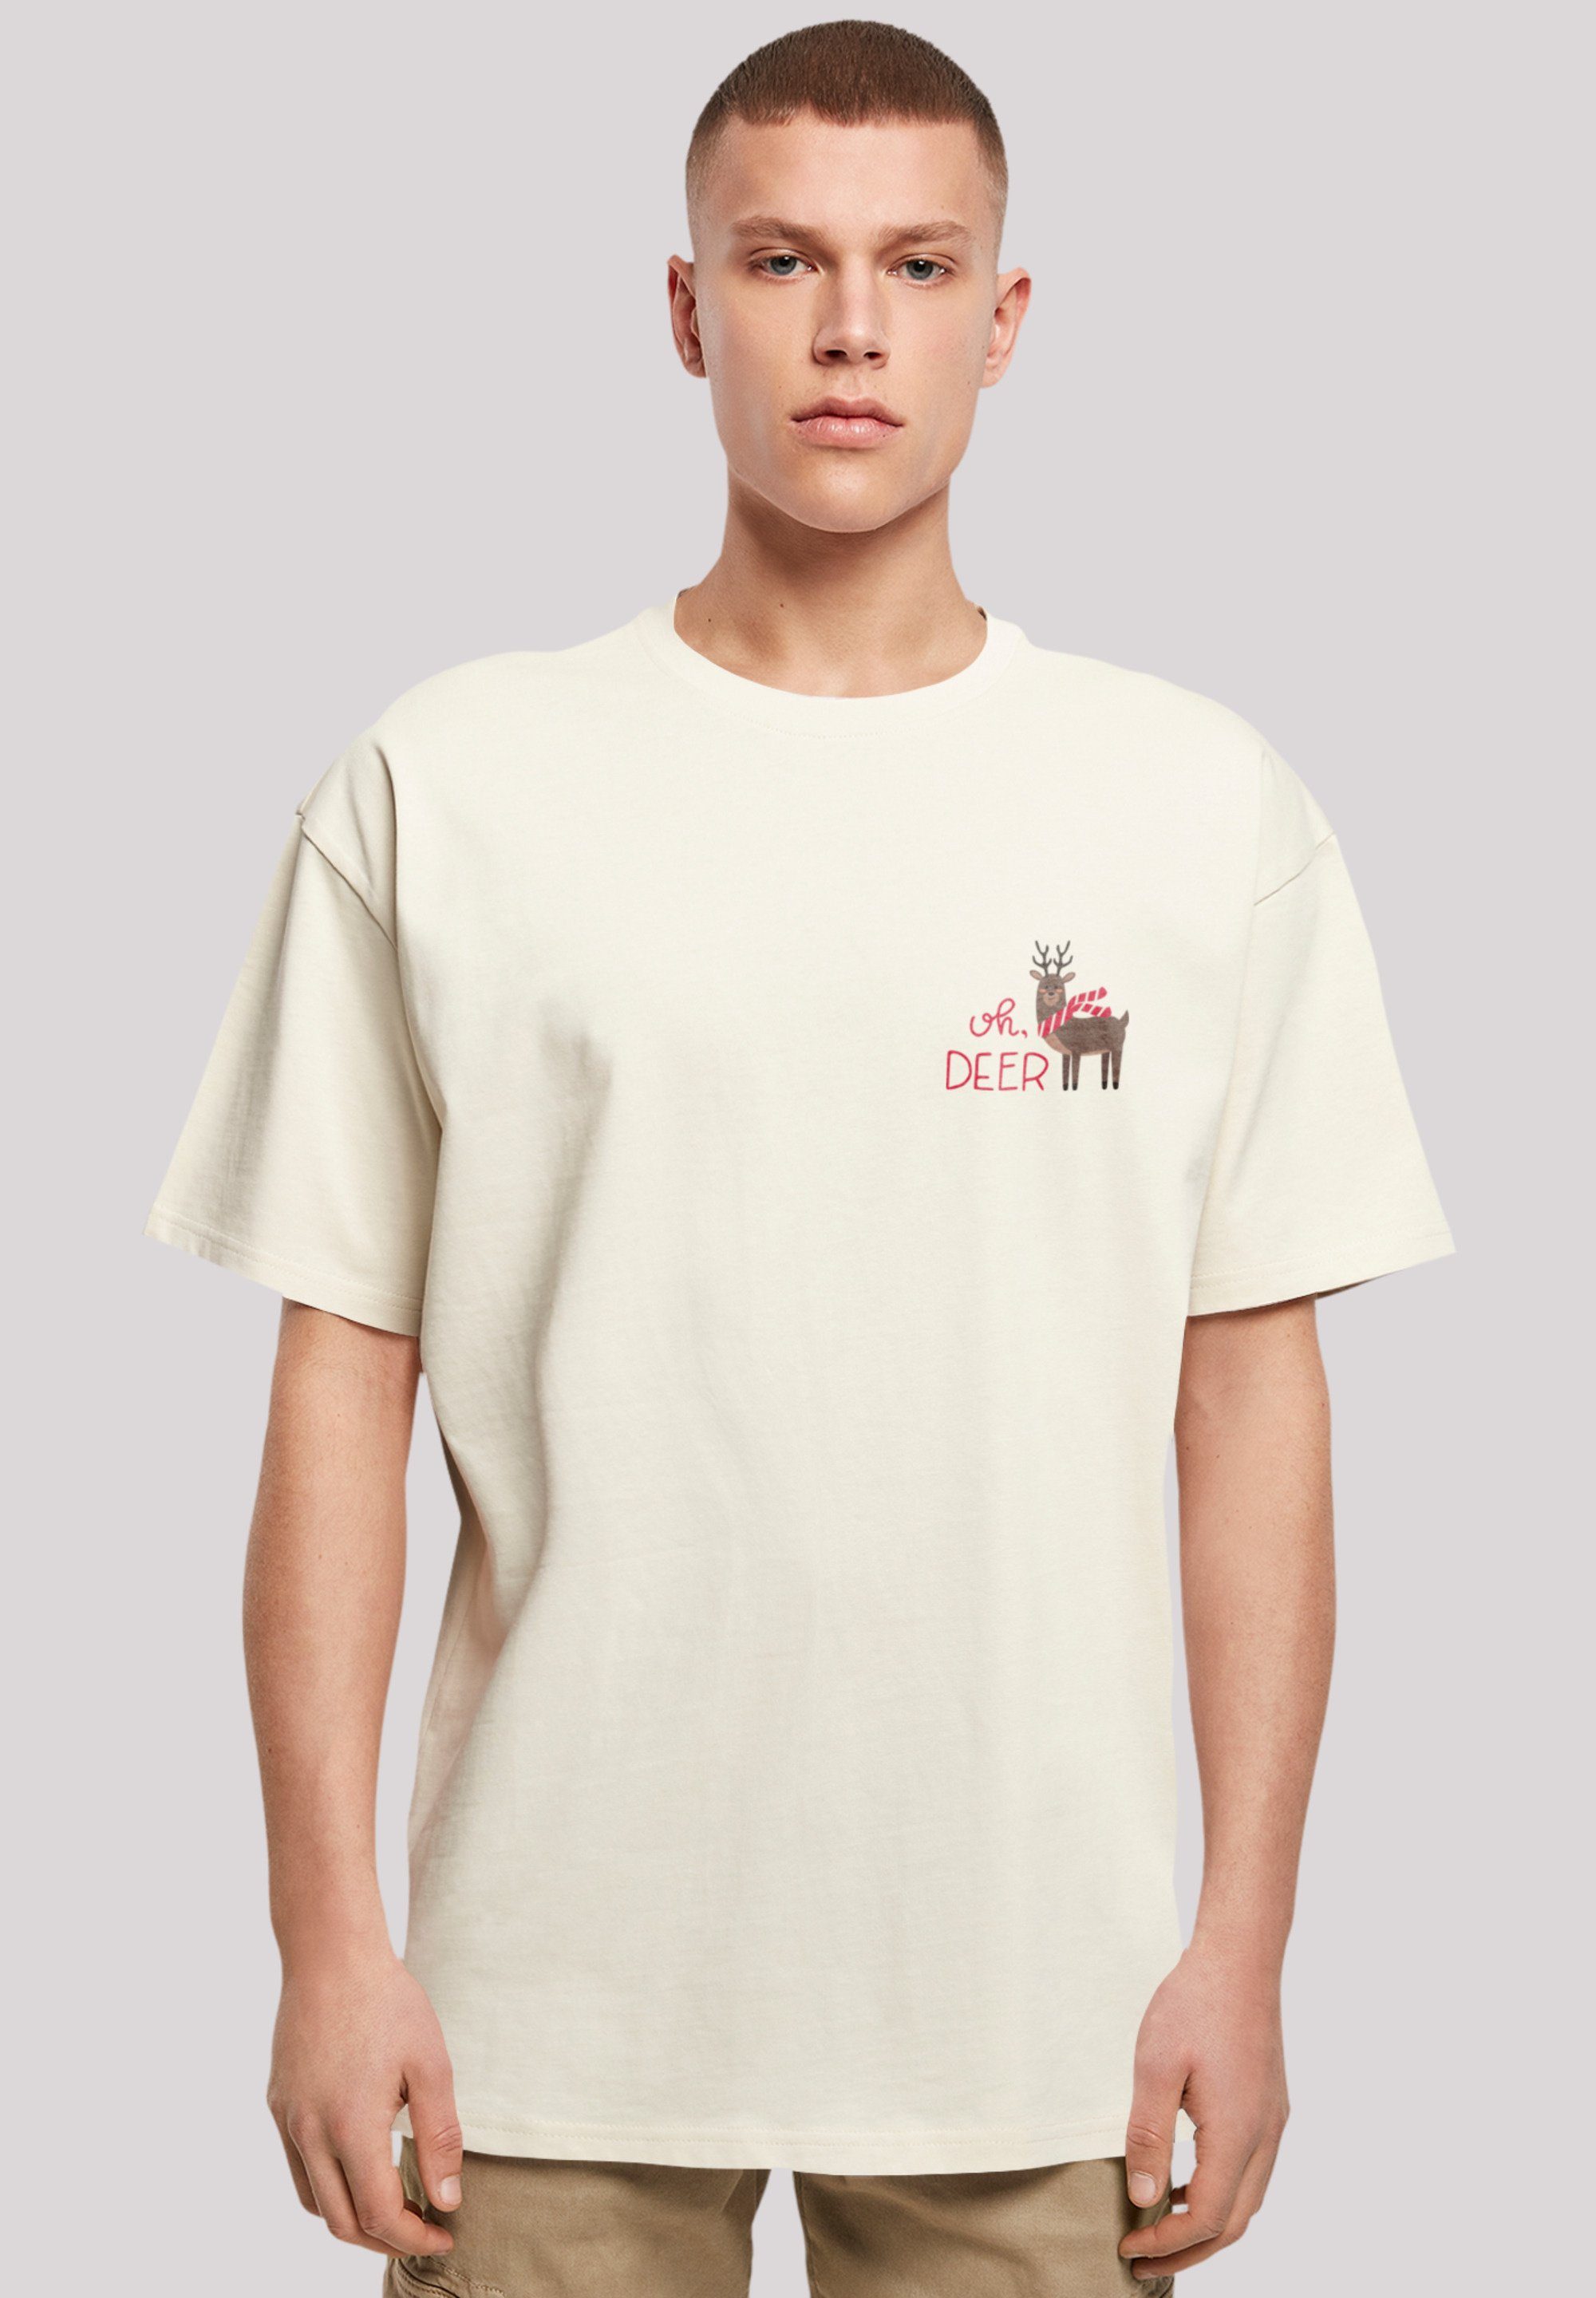 F4NT4STIC T-Shirt Christmas Deer Premium Qualität, Rock-Musik, Band sand